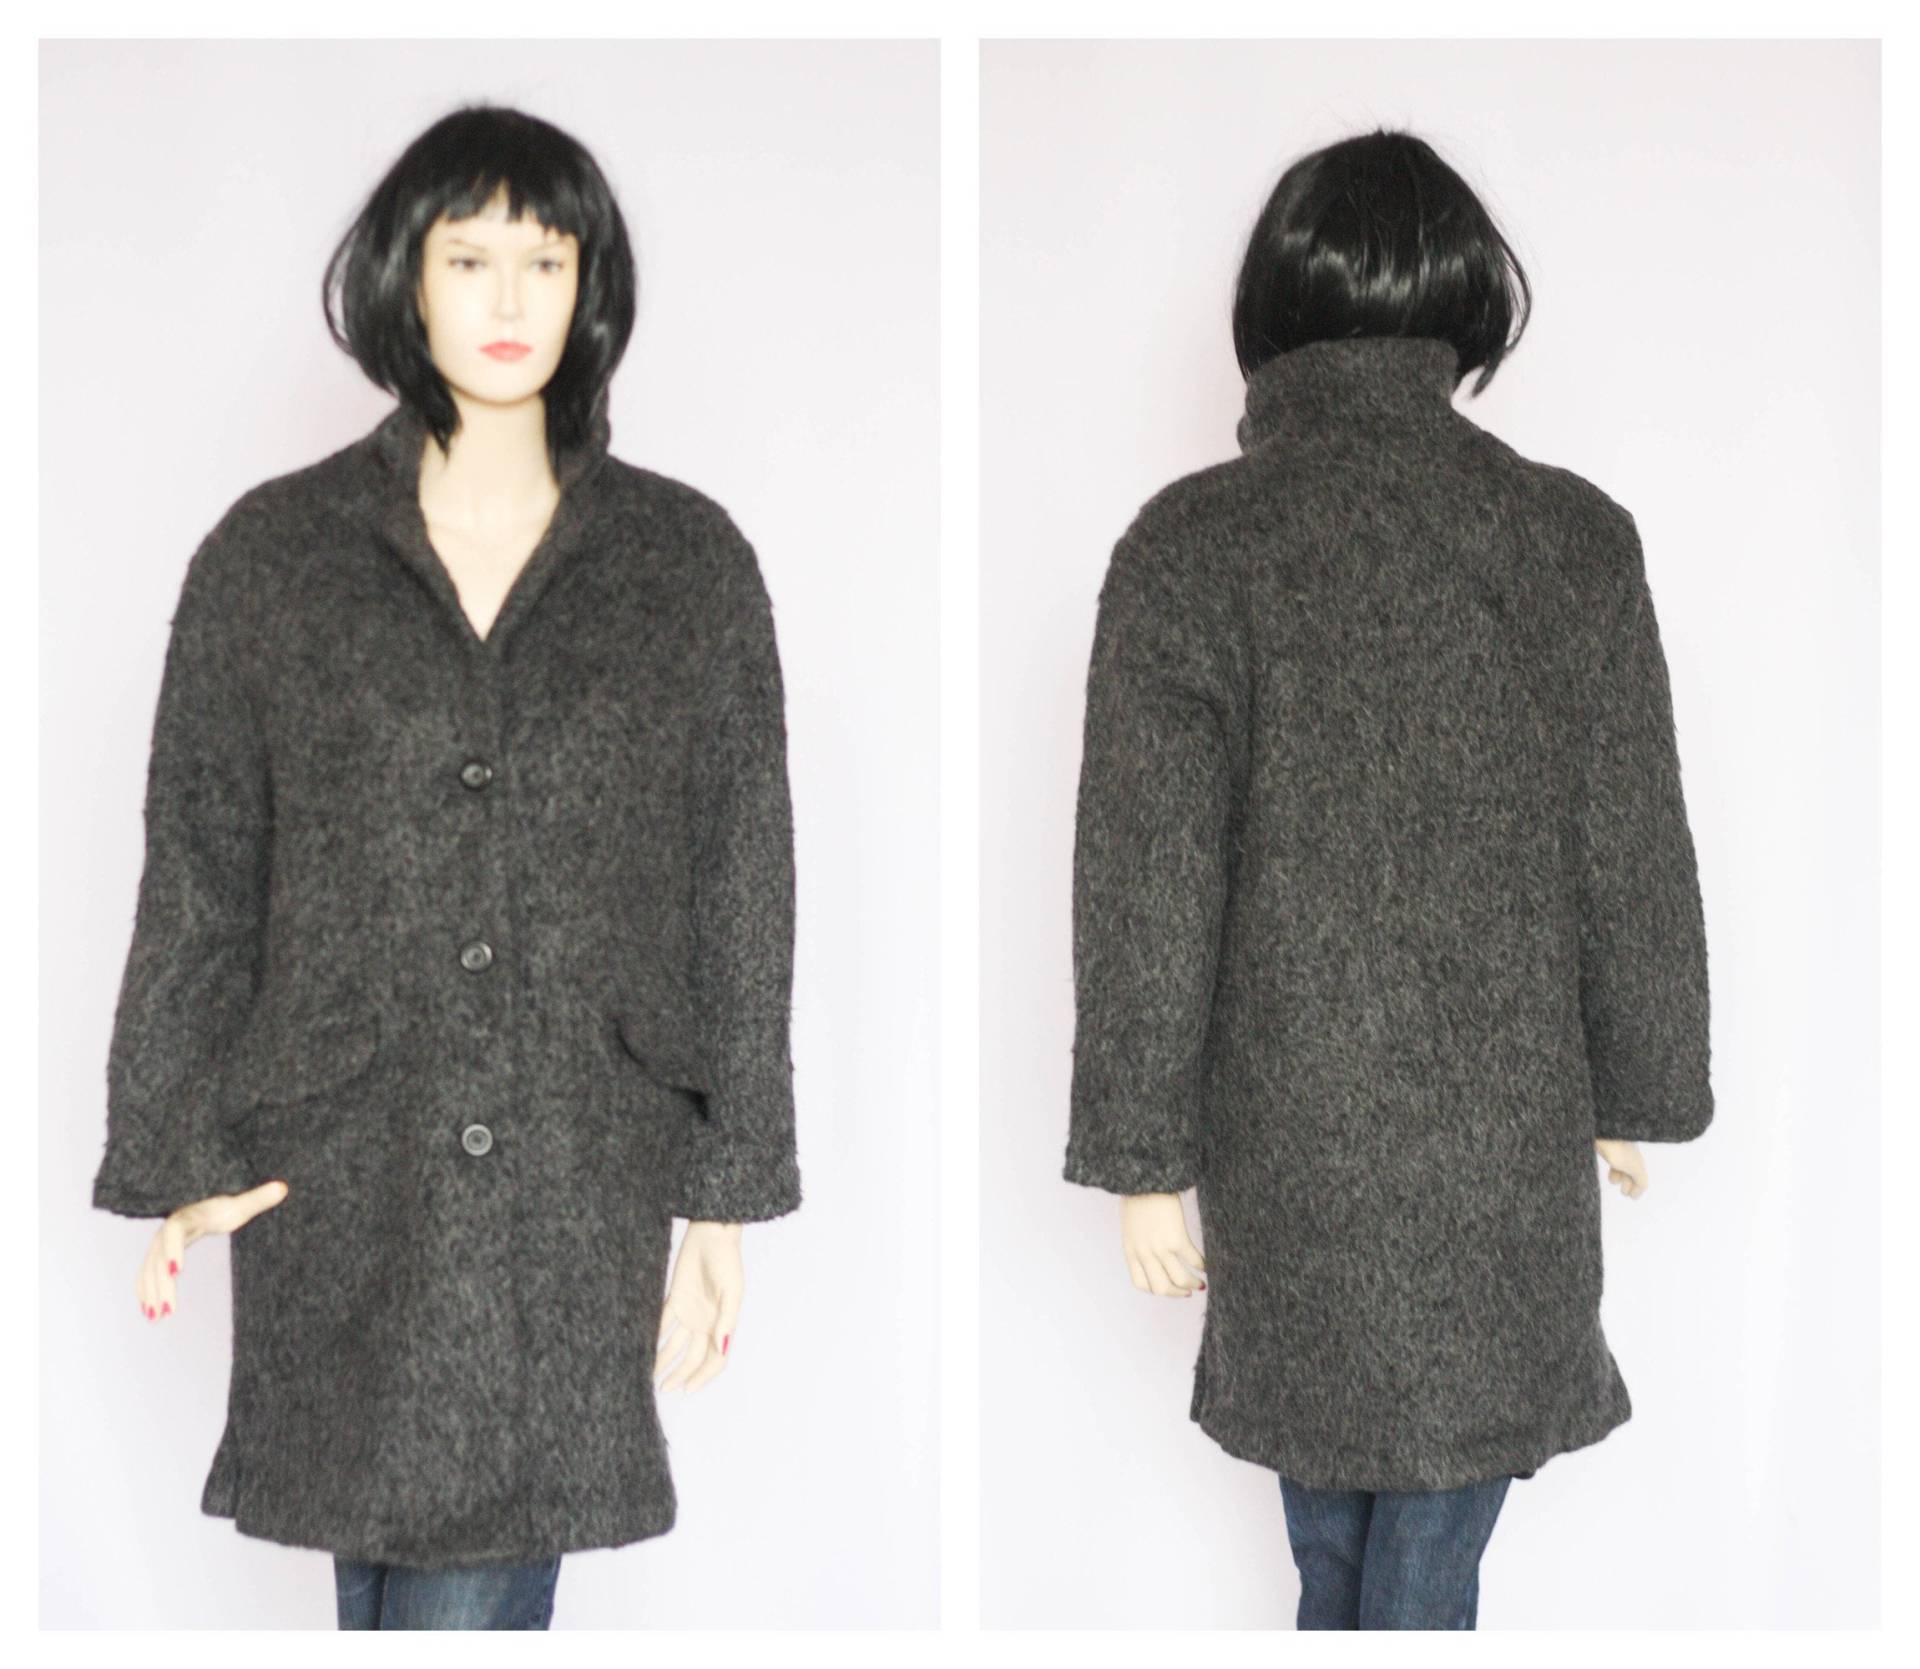 Mohair Alpaka Mantel Graue Wolle Vintage Wintermantel Warmer Retro Damenmantel Overcoat Outwear Winterbekleidung von MechanicalOrange